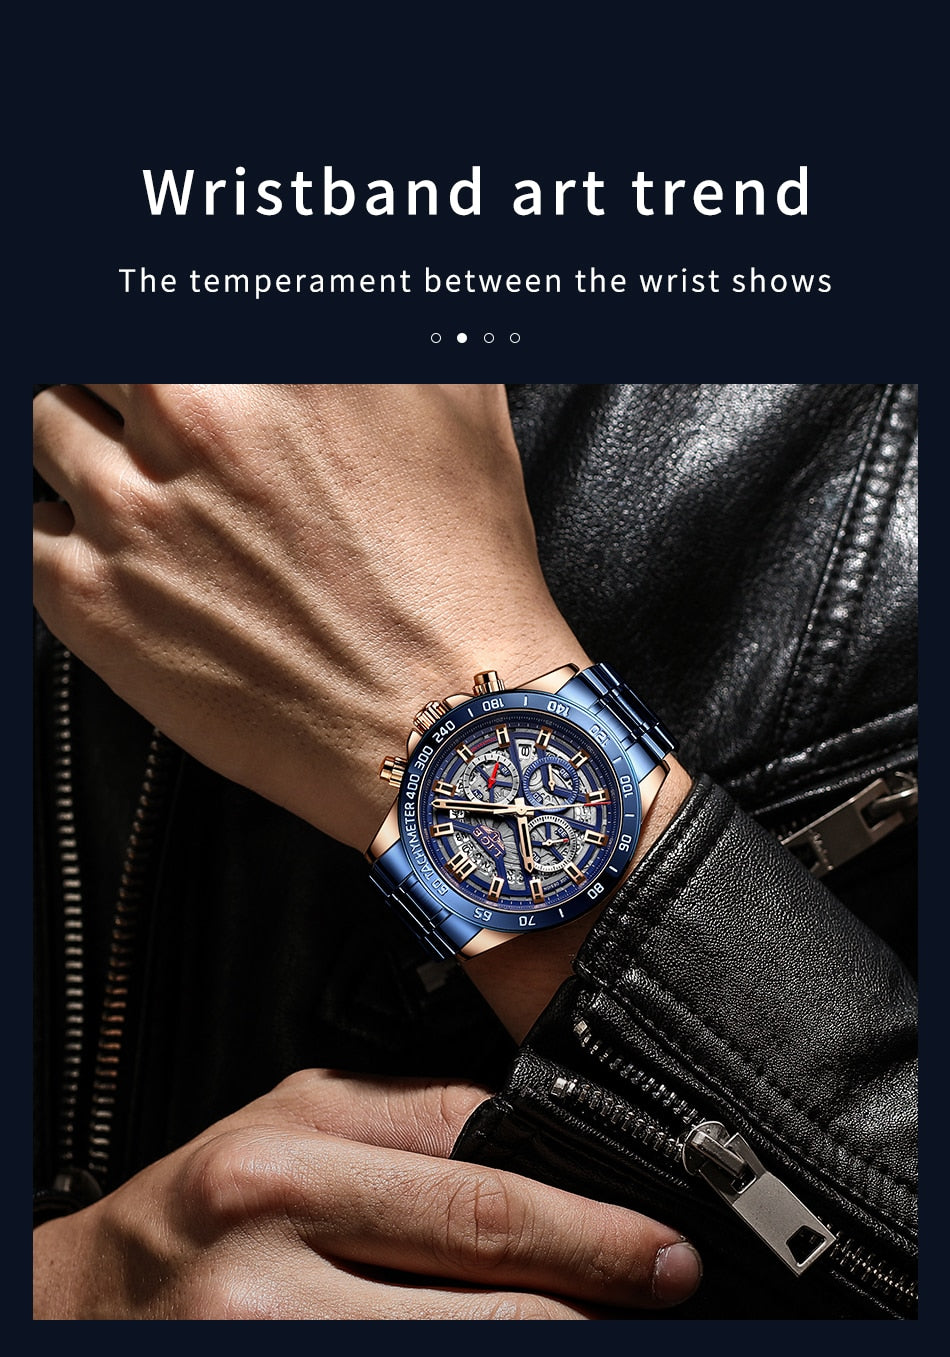 Stainless Steel Top Brand Luxury Sports Chronograph Quartz Watch